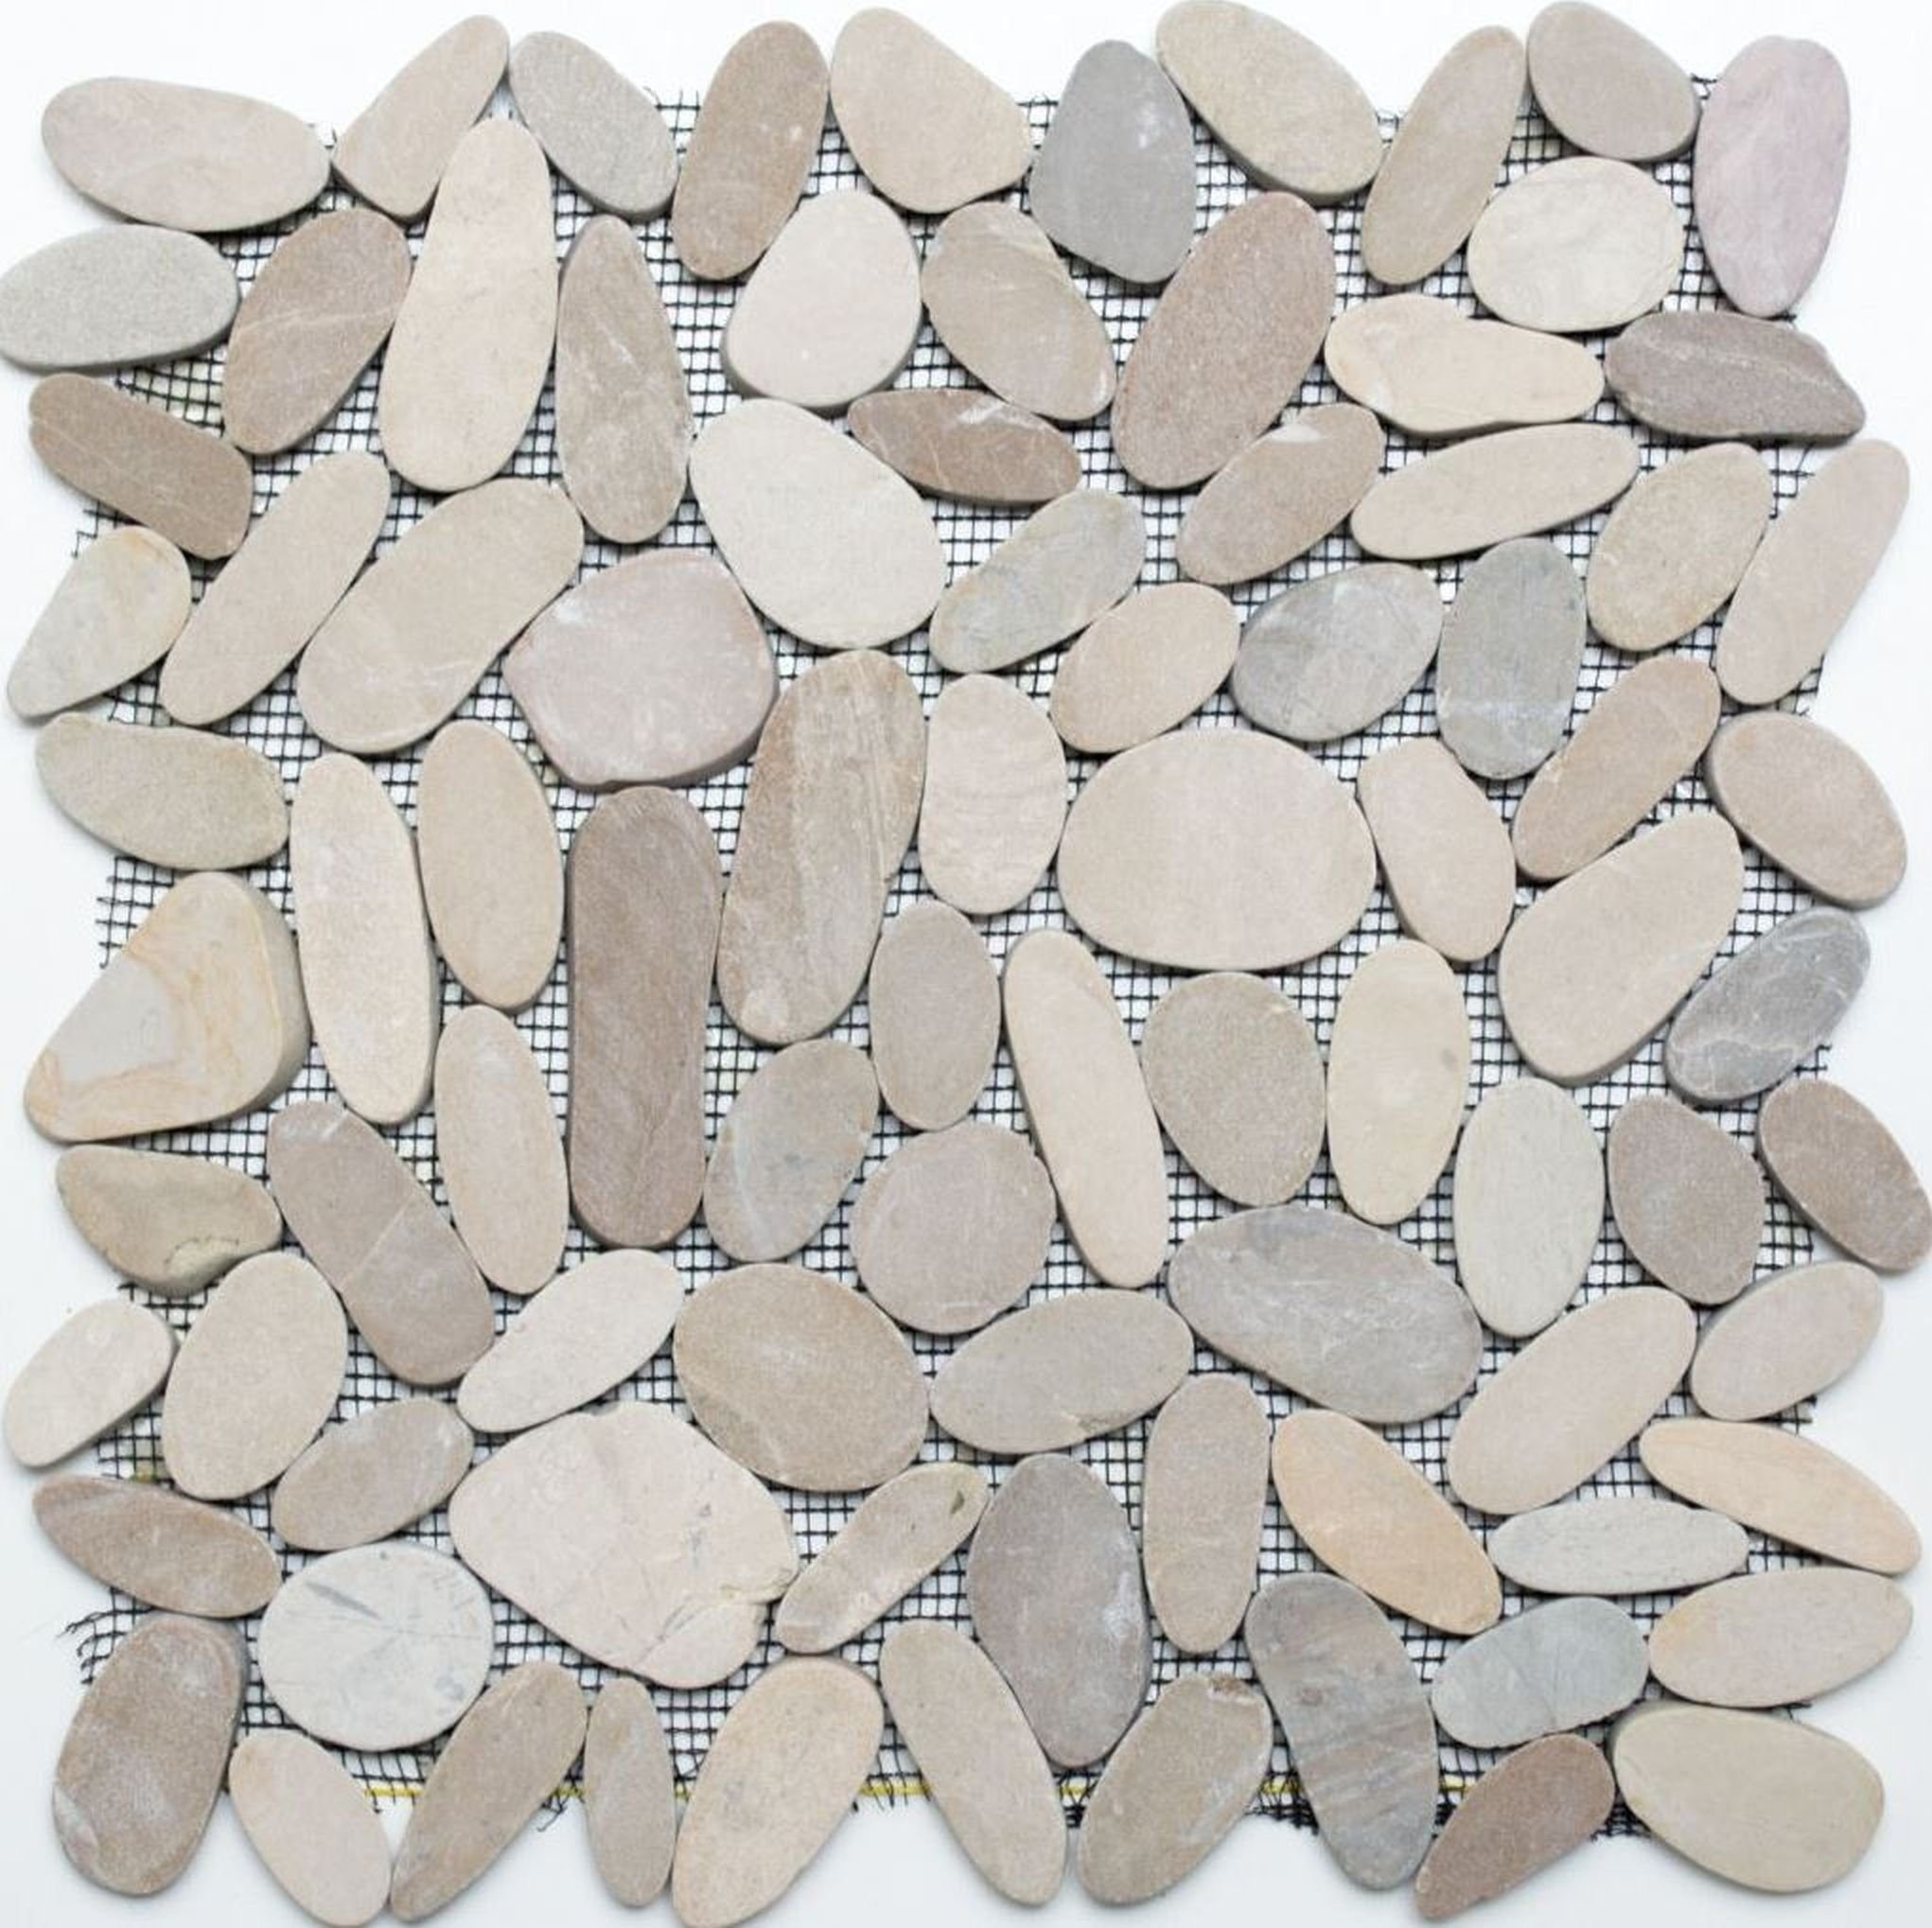 Matten Flusskiesel Natursteinteppich / Mosani Mosaikfliesen matt hellbeige 10 Oval